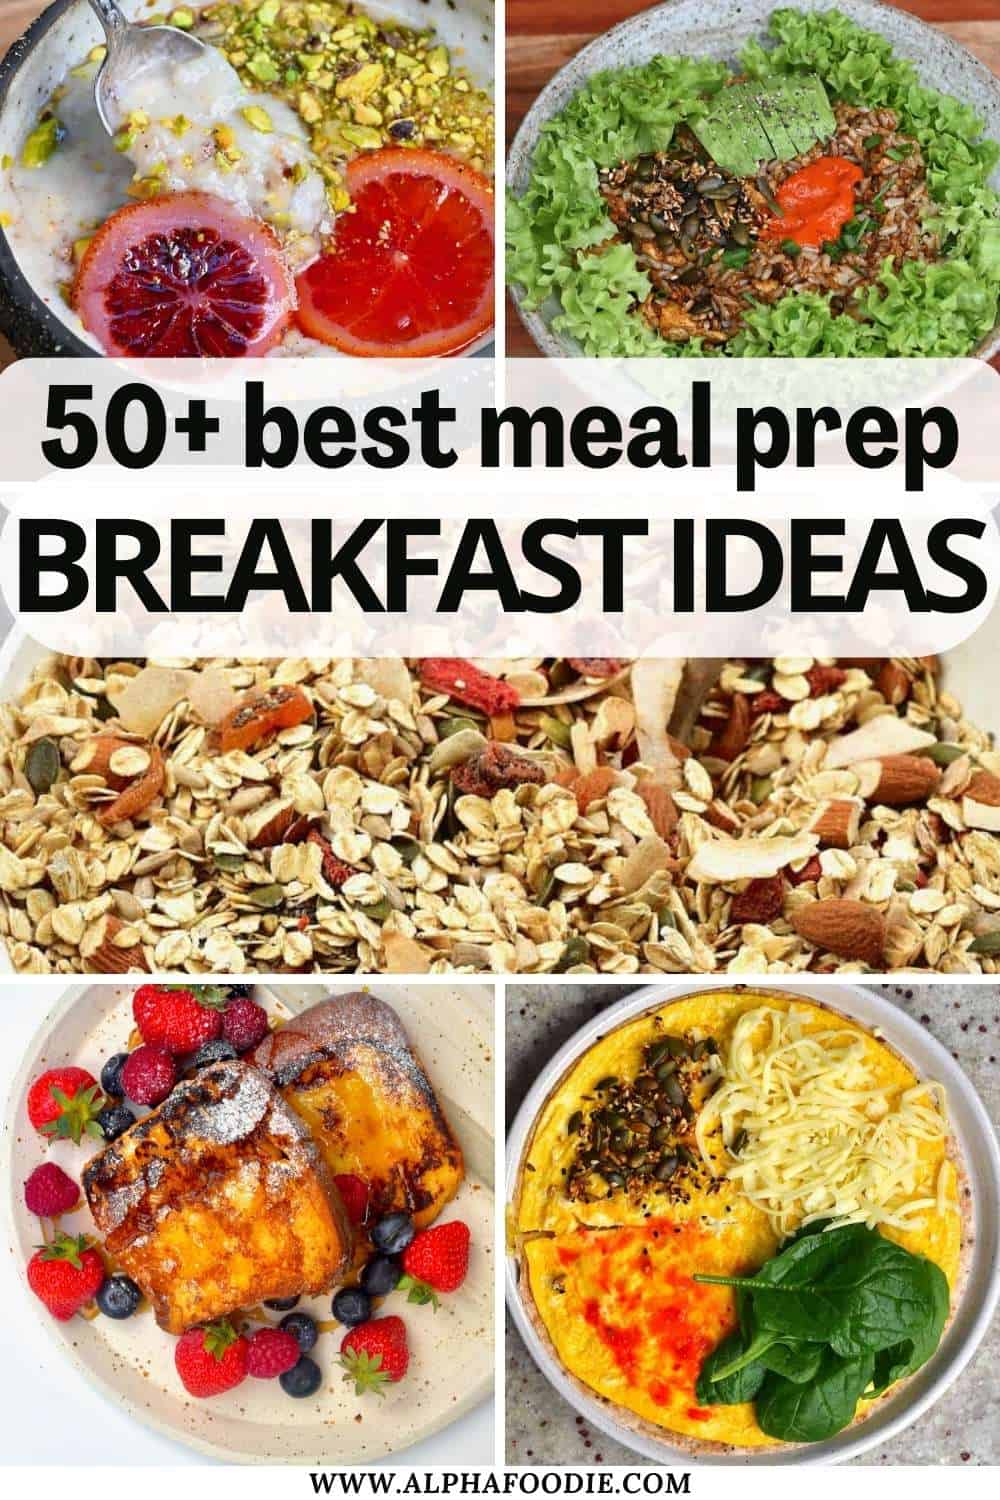 50+ Healthy Breakfast Meal Prep Ideas on the Go - Alphafoodie